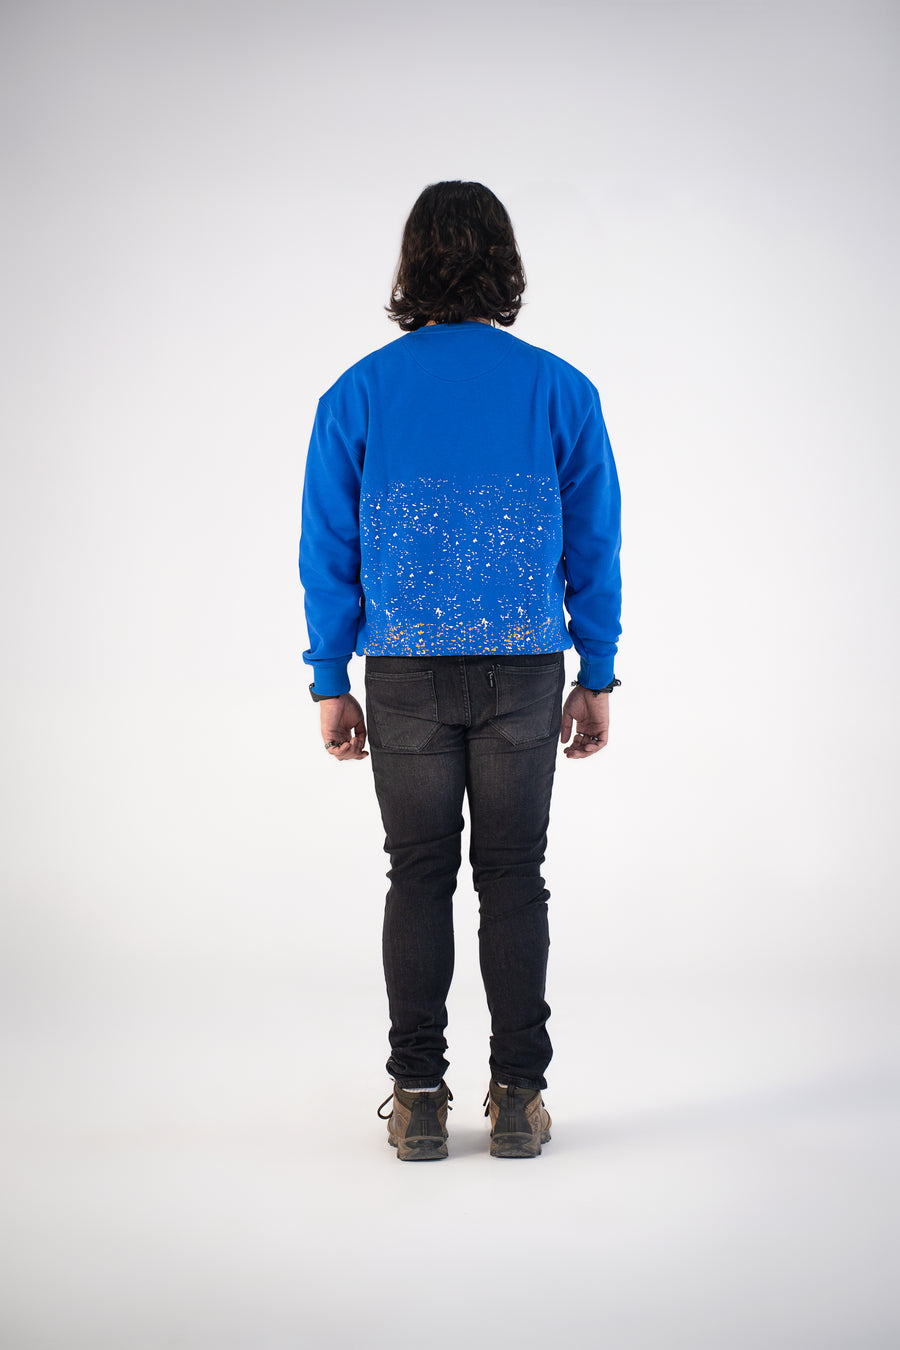 Paint Print Sweatshirt | BLK Vogue